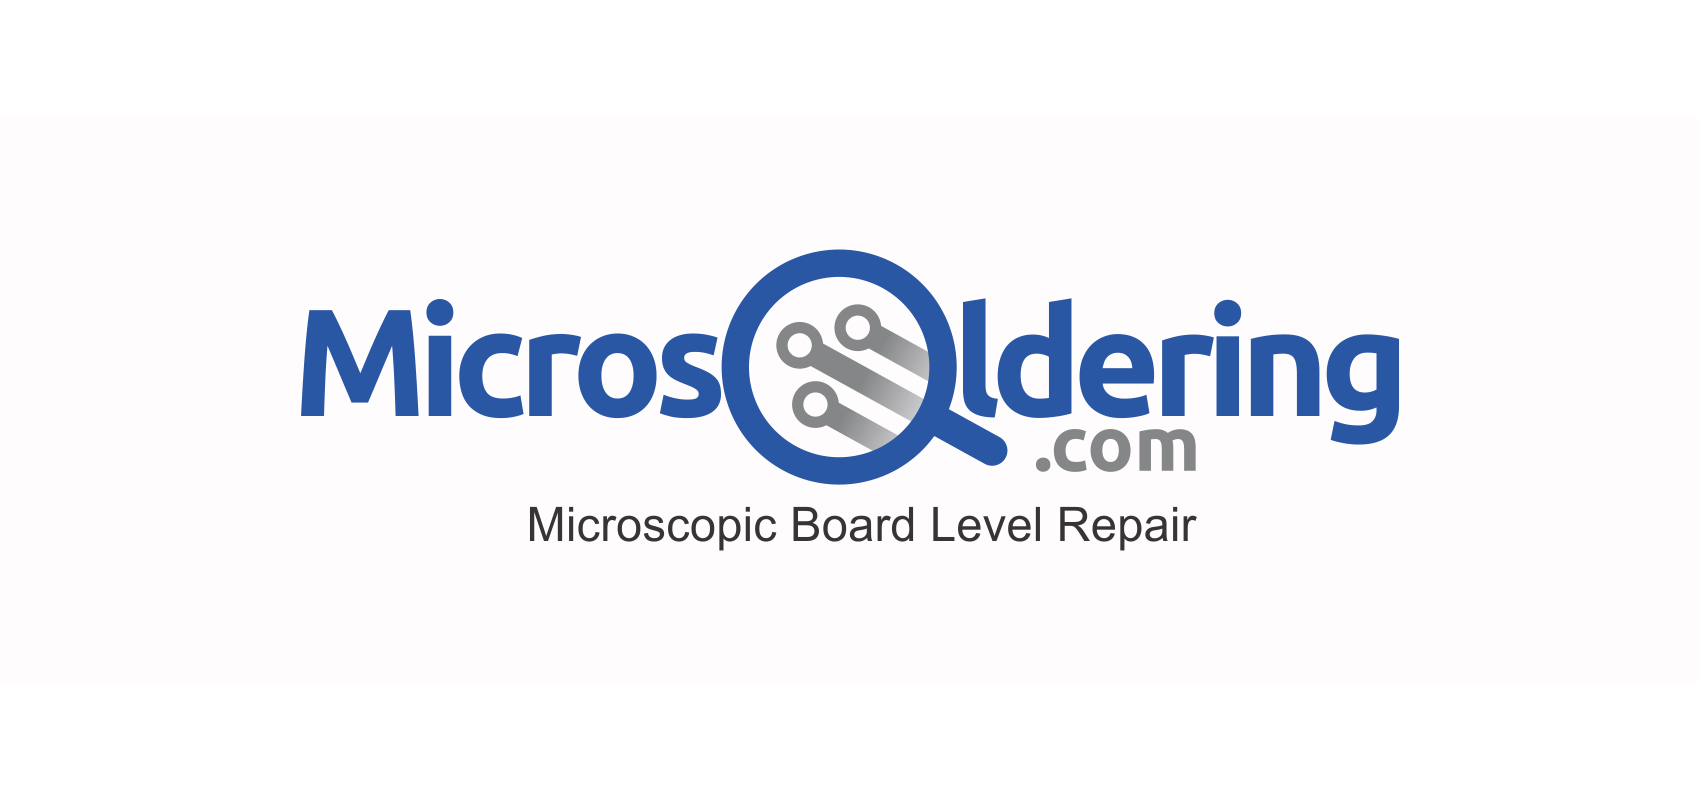 Company logo of Microsoldering.com